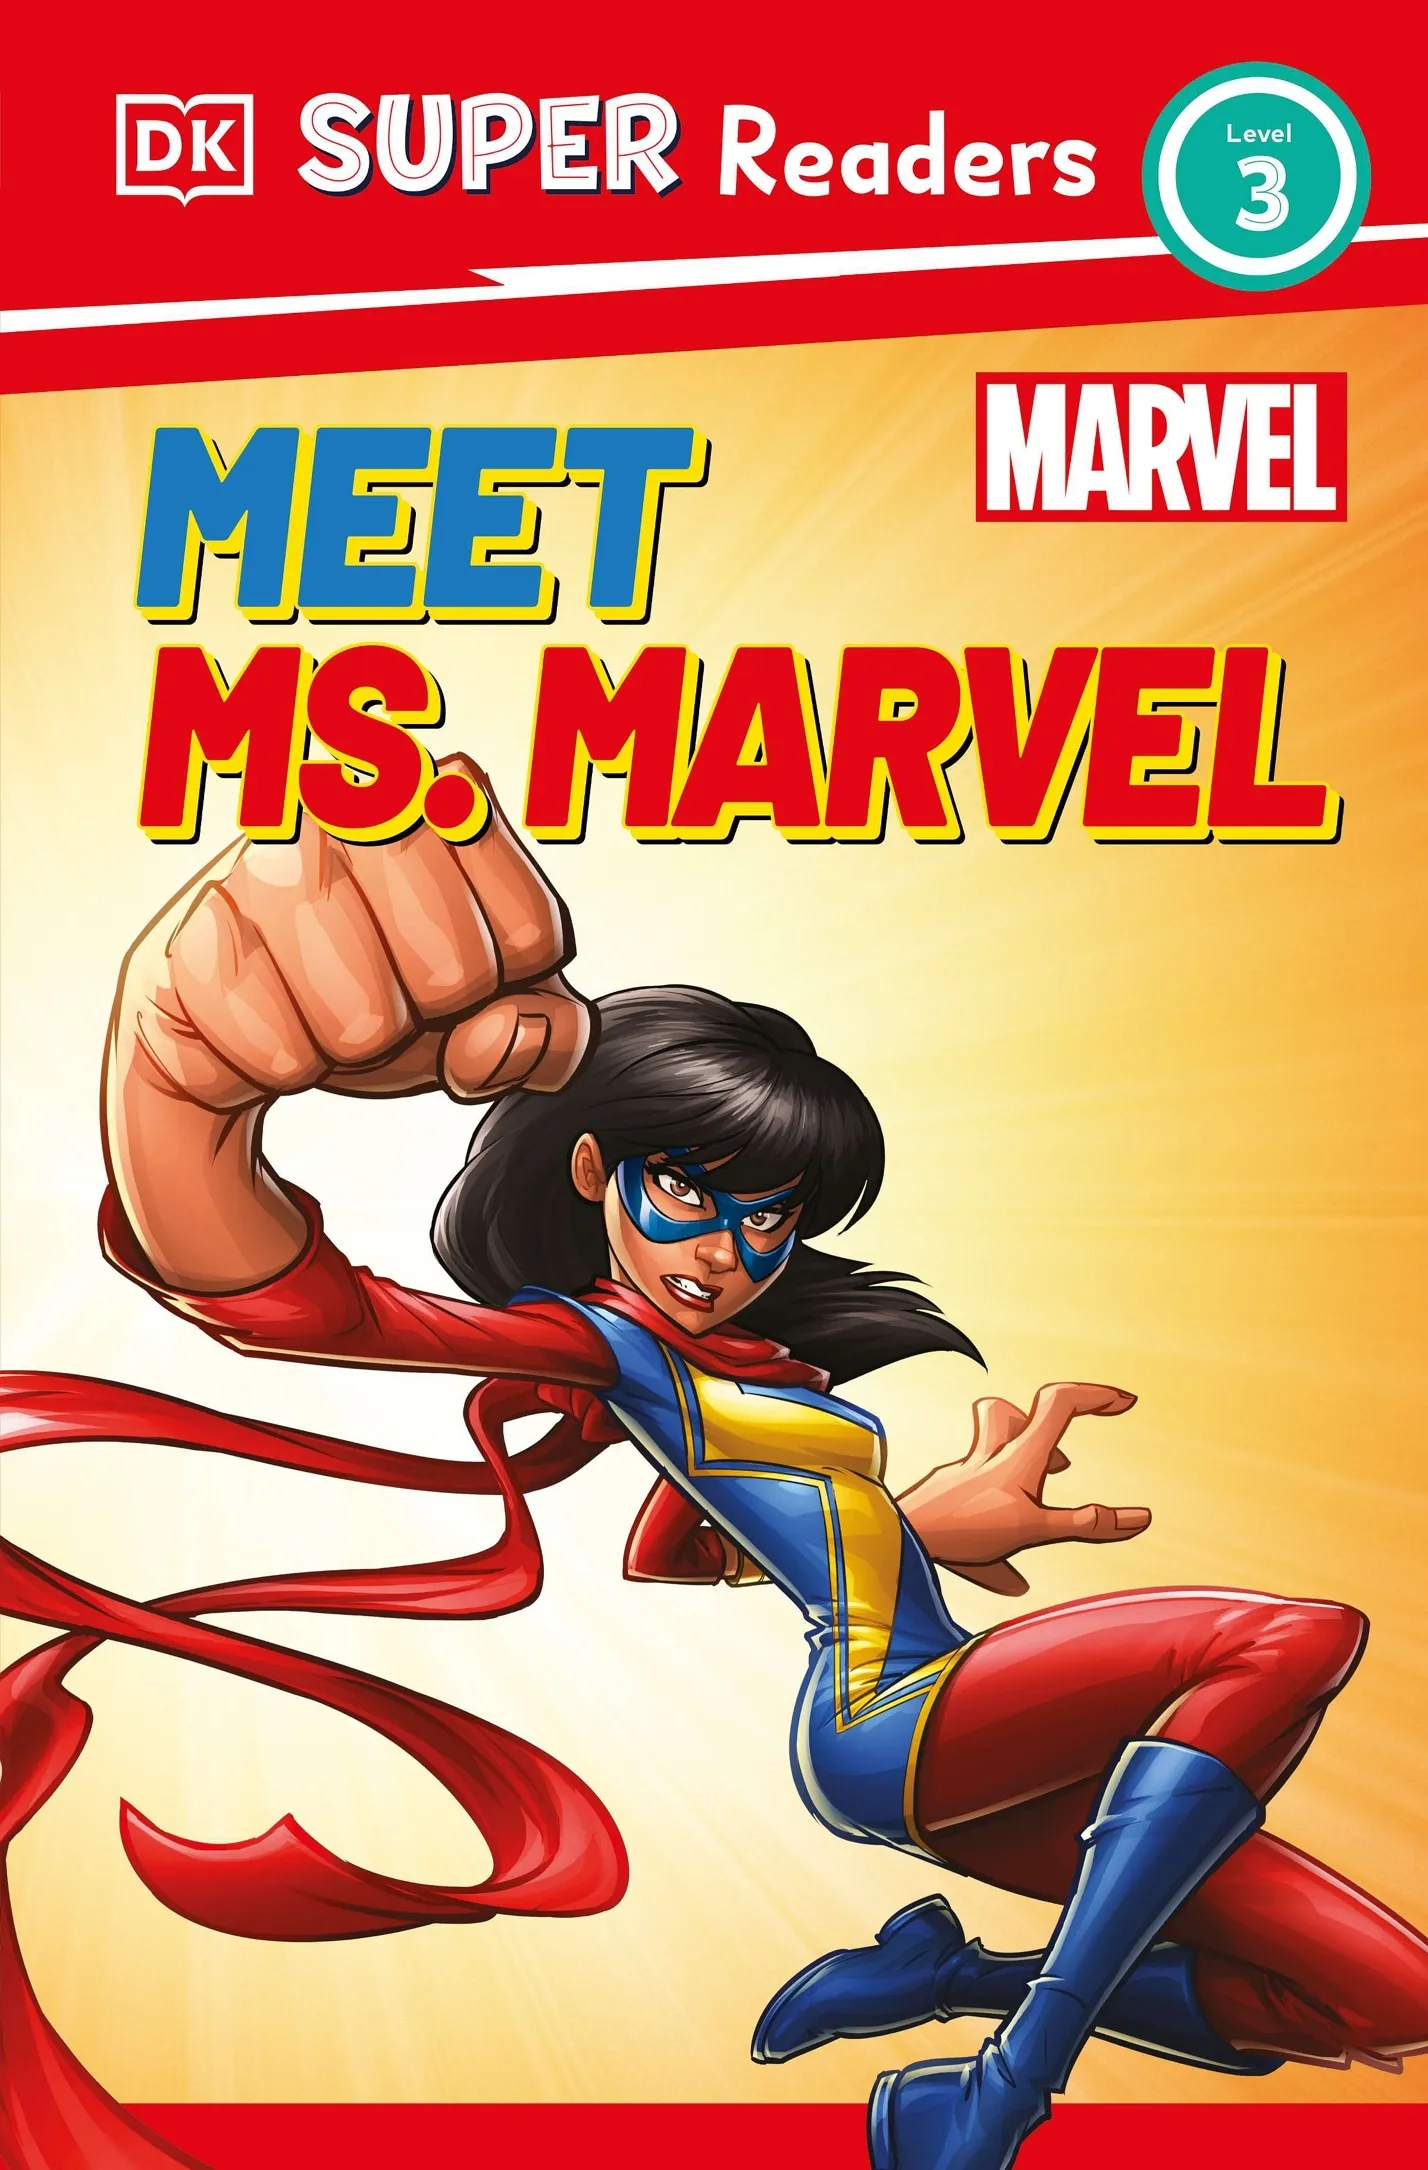 DK Super Readers Level 3 Marvel Meet Ms. Marvel (DK Readers)